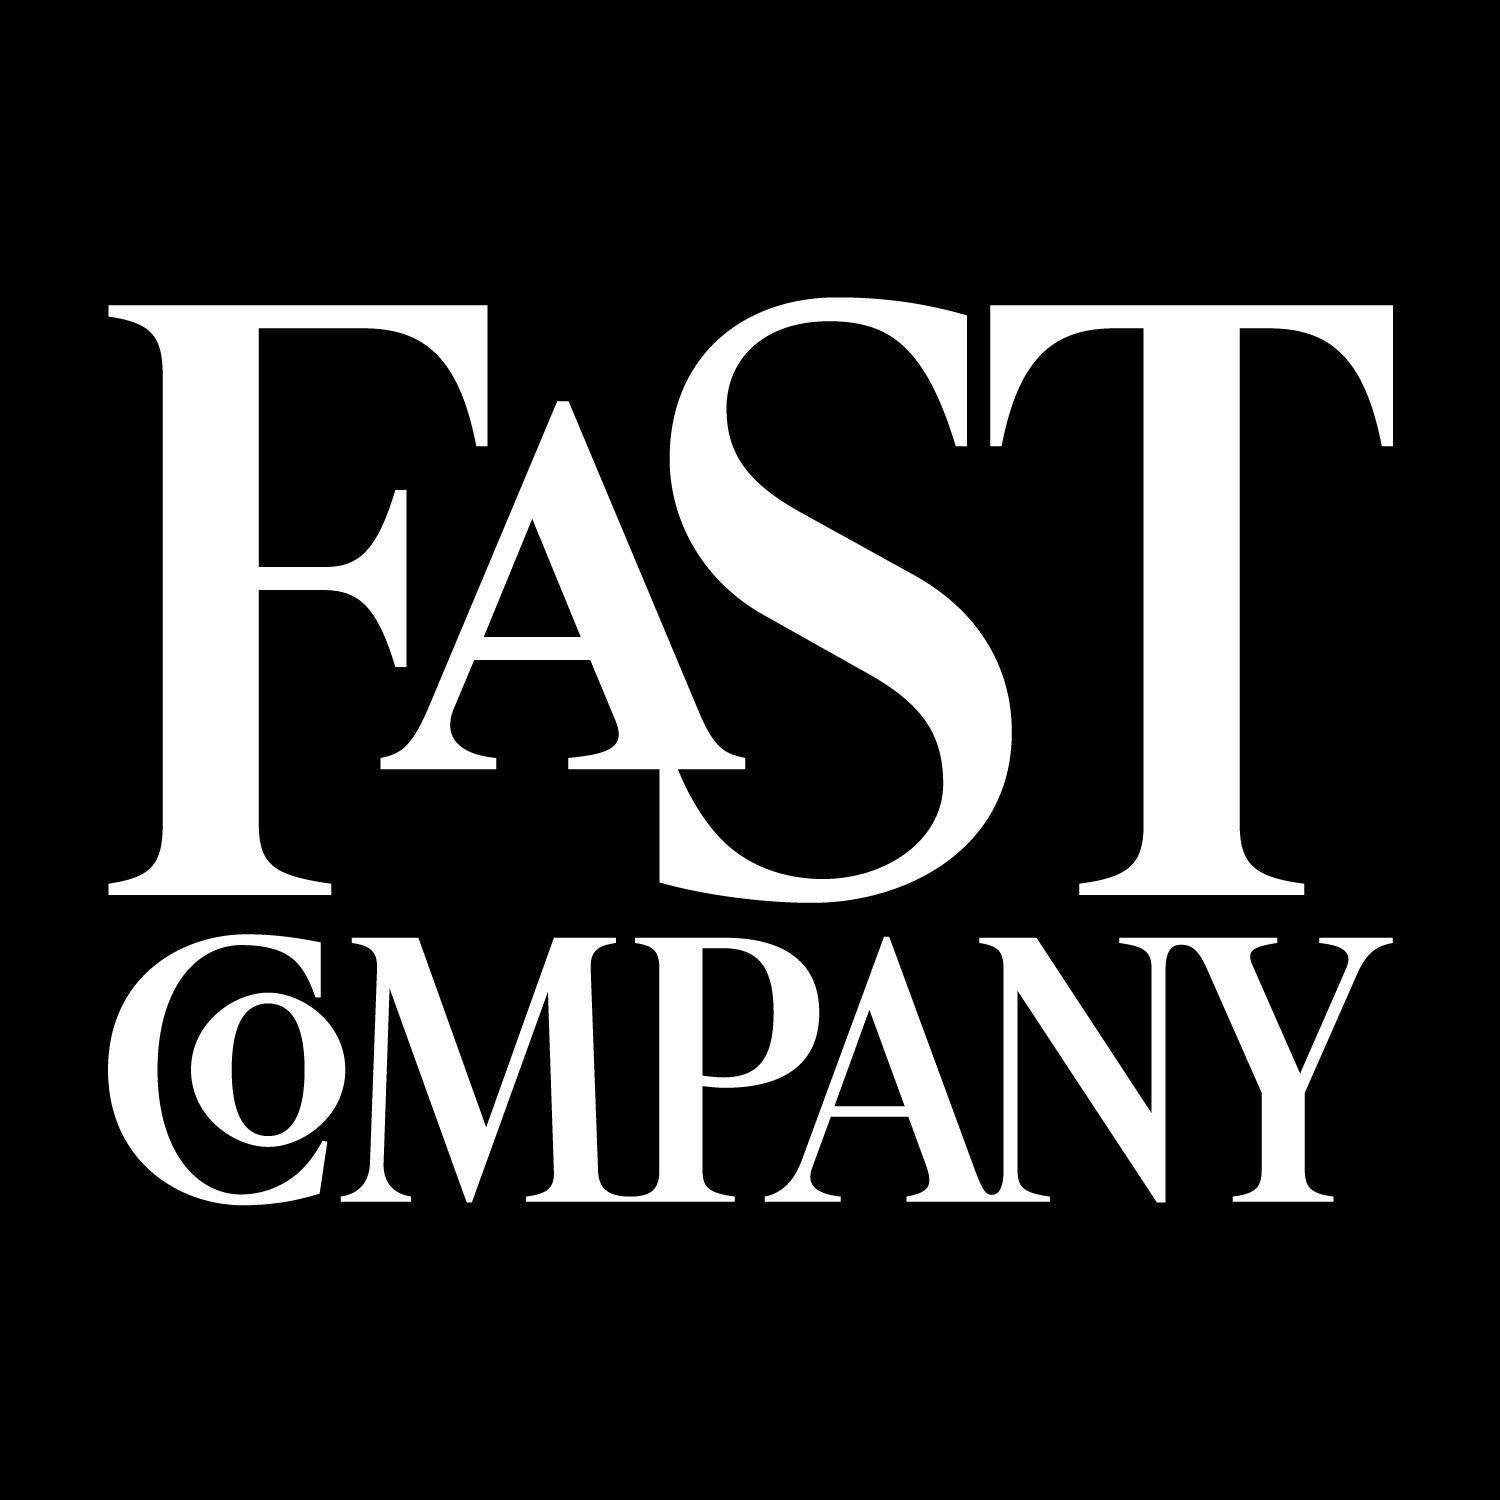 Black Company Logo - Fast Company logo white black stacked | Querium